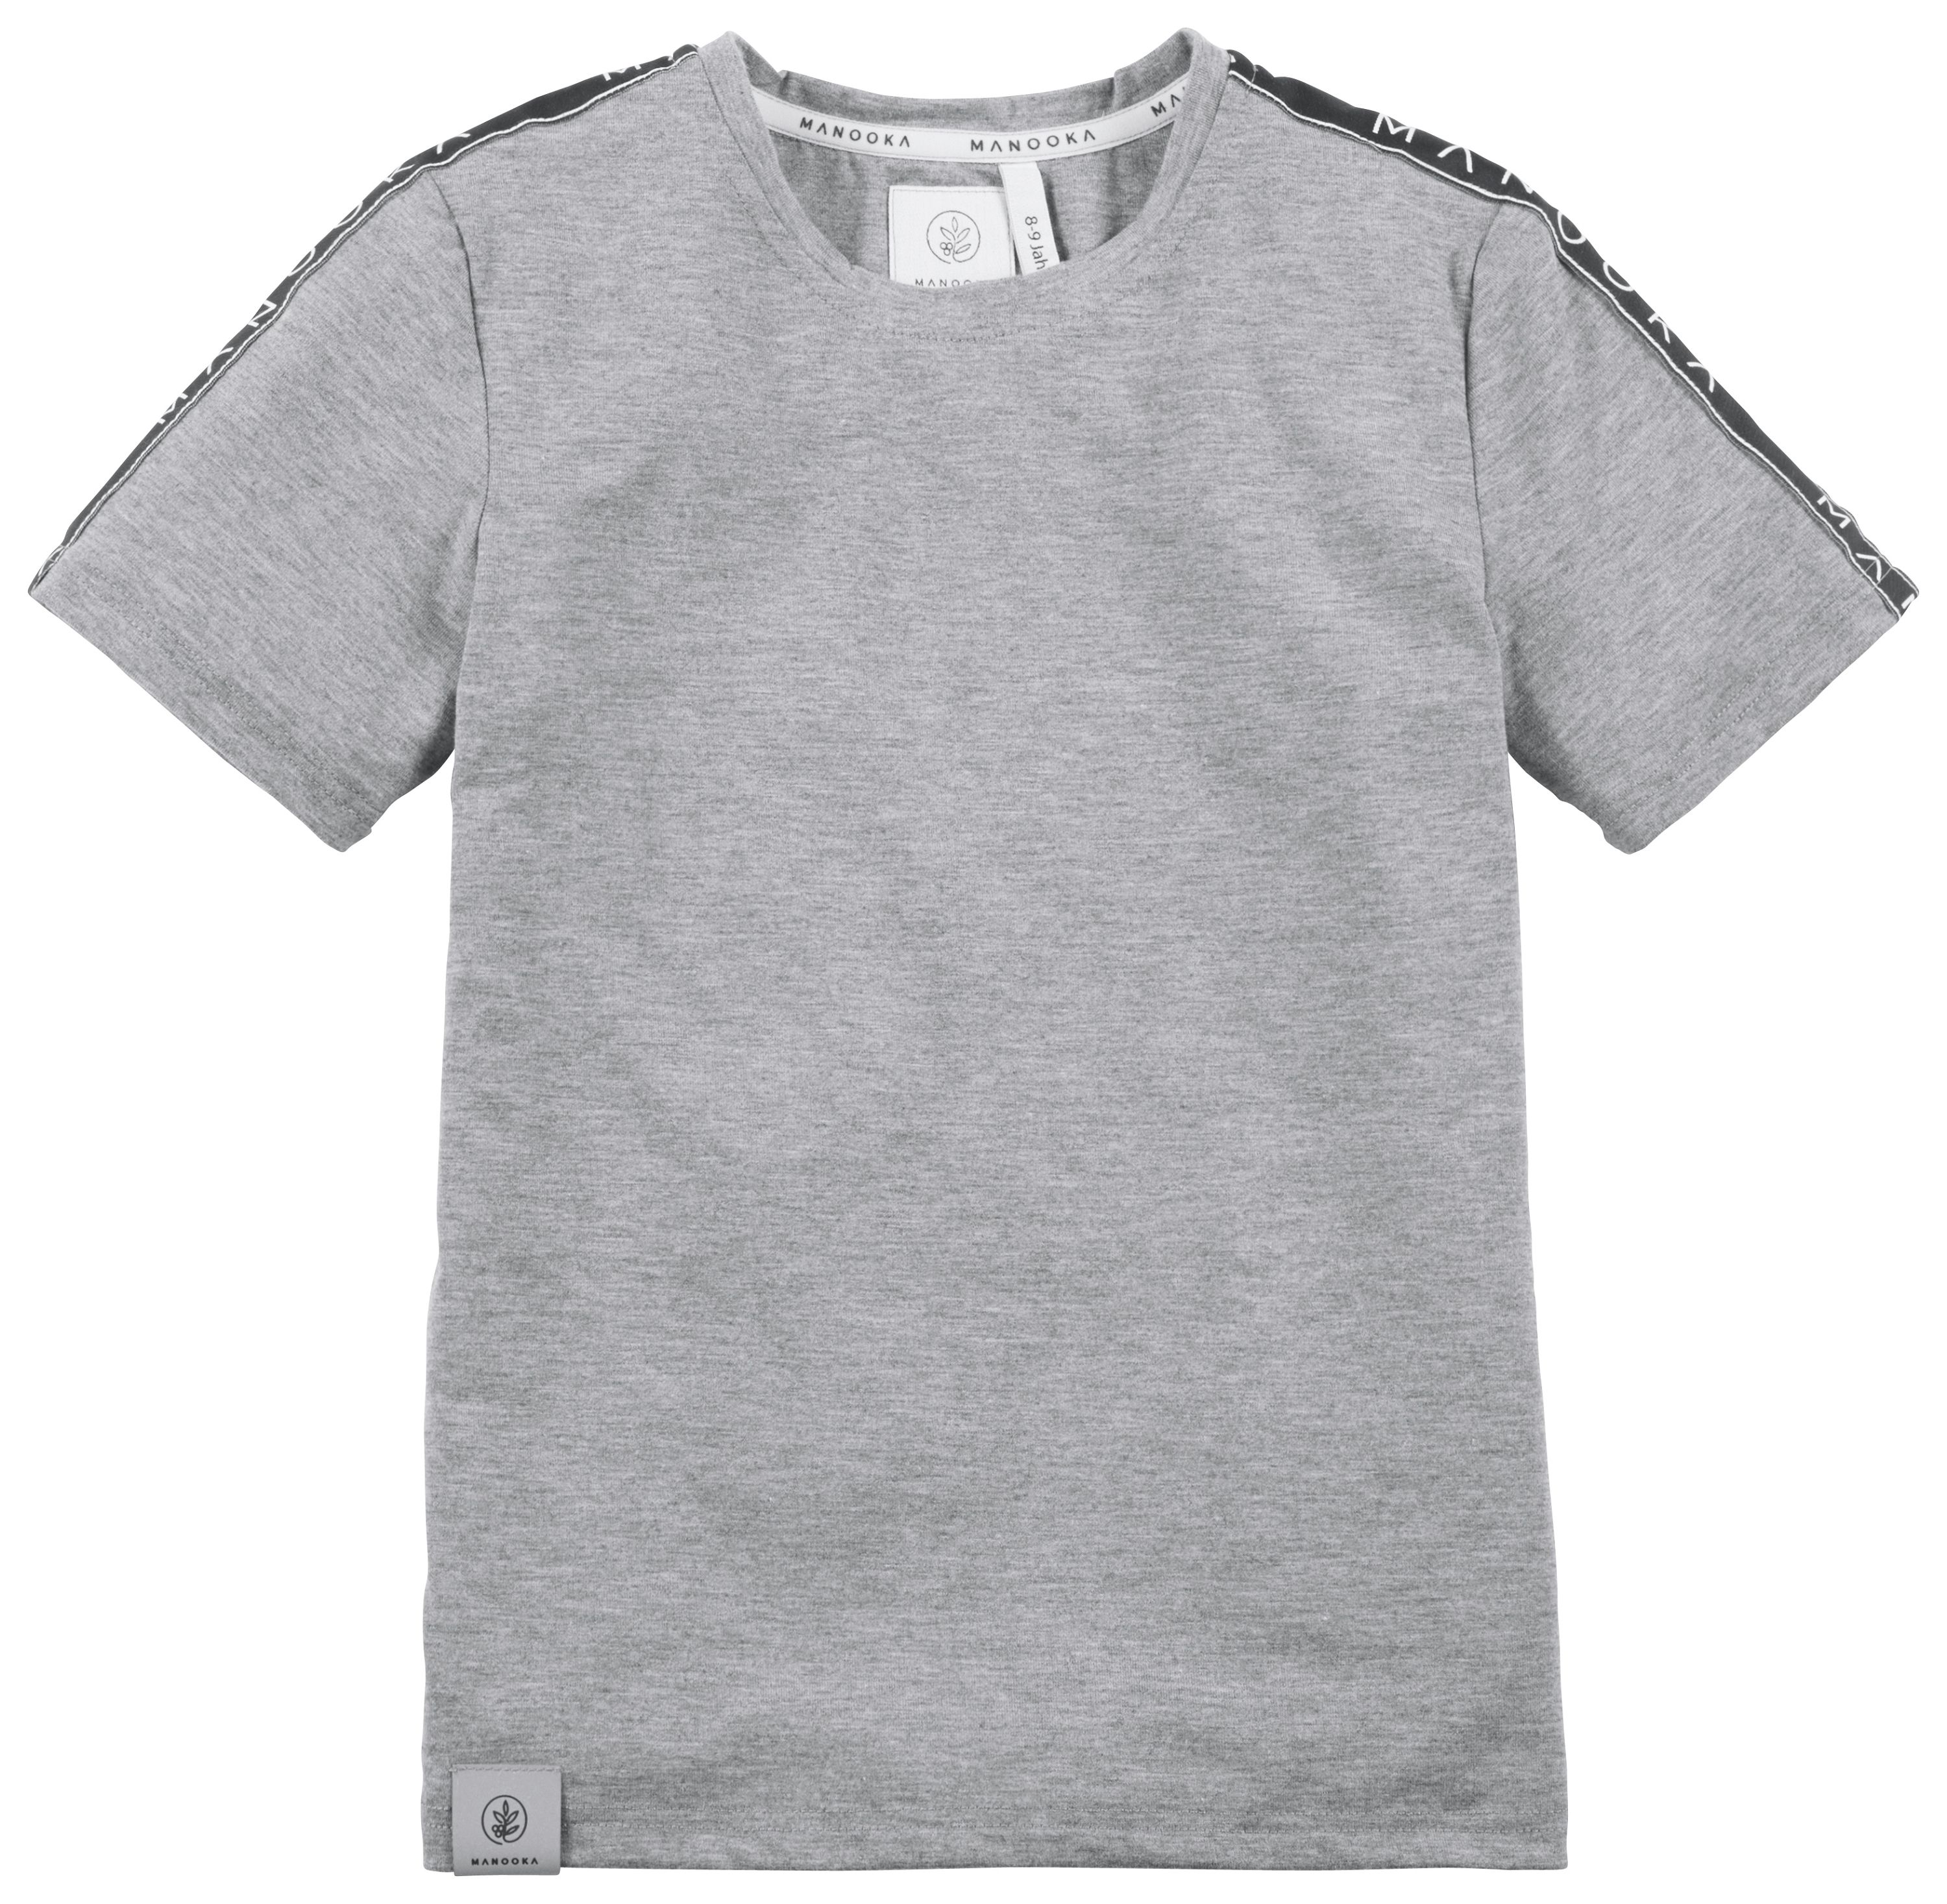 Ein graues Santiago-Shirt